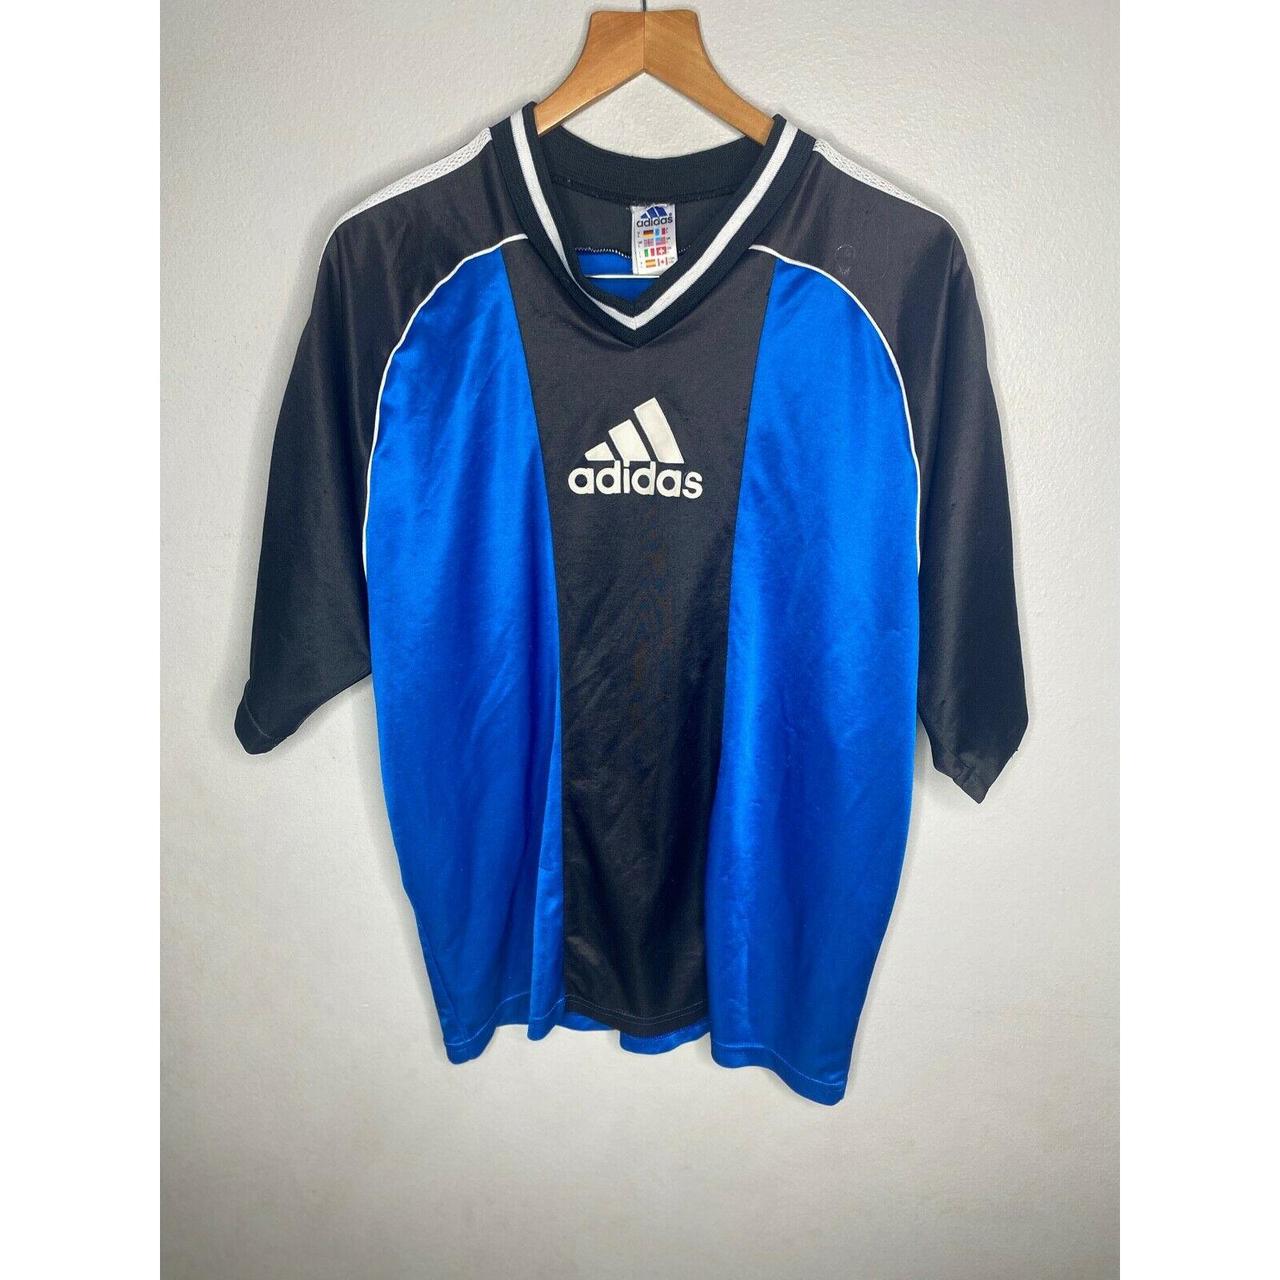 Vintage Adidas Soccer Jersey - L